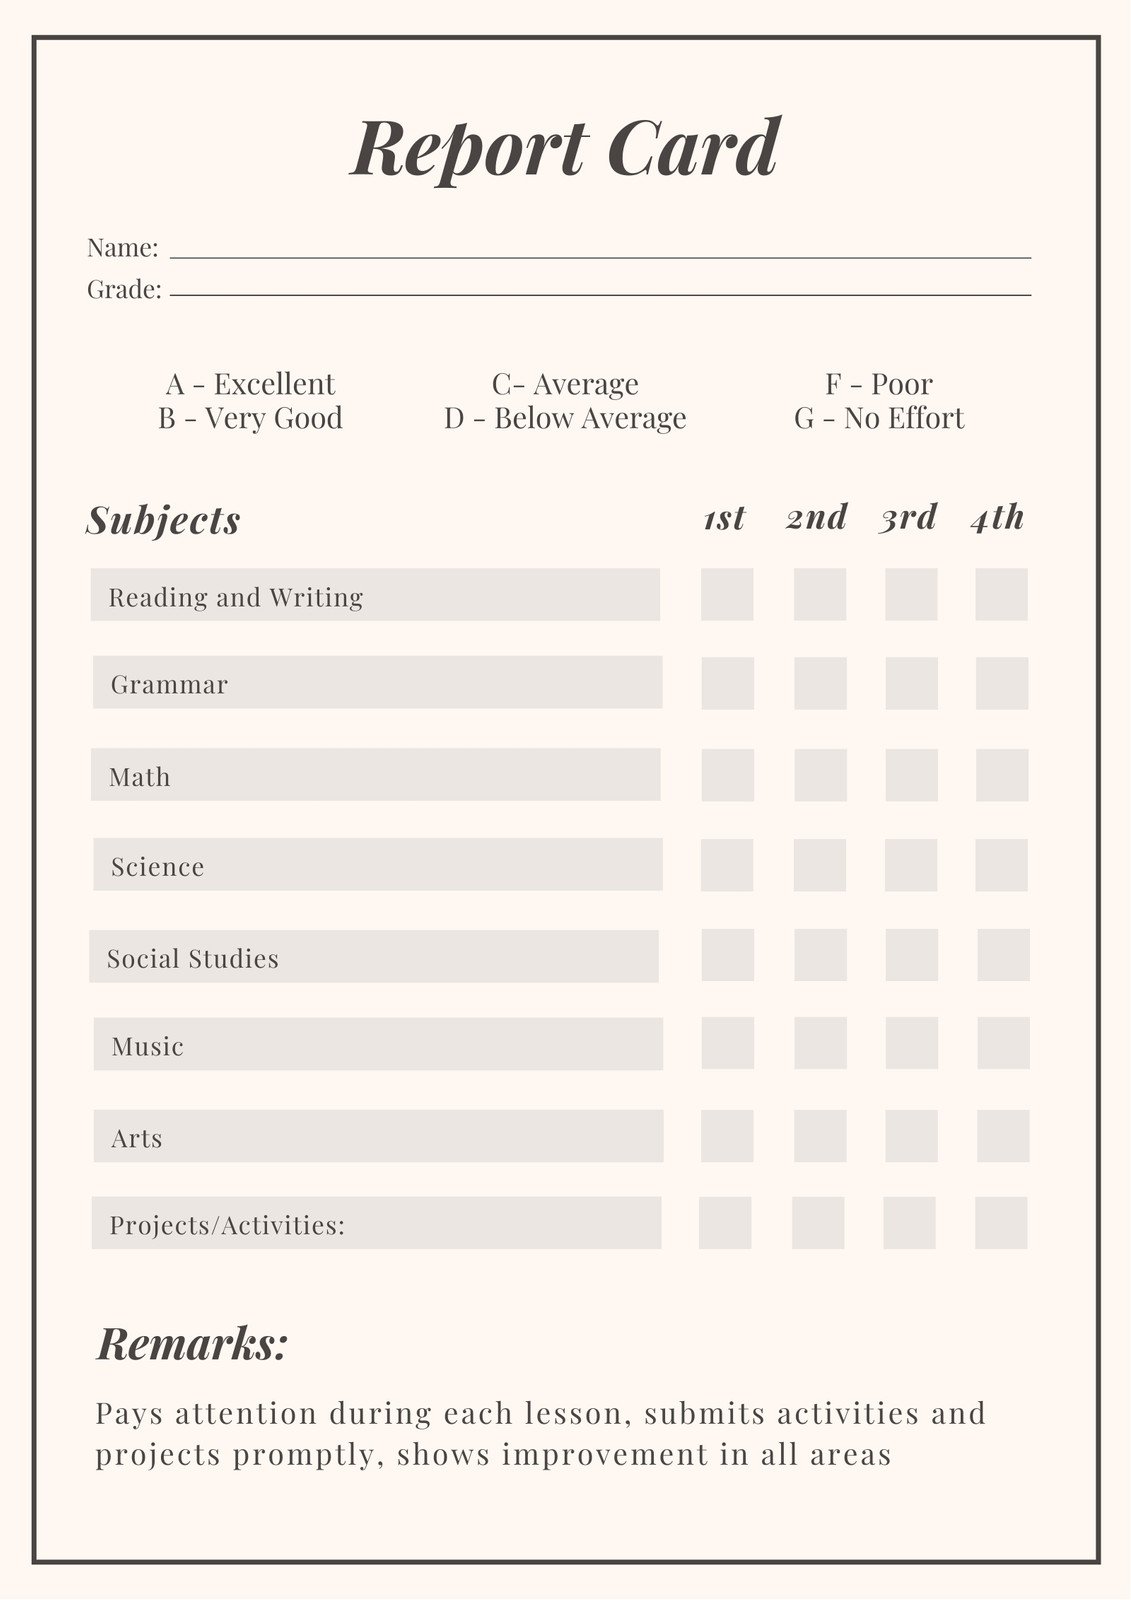 Free, printable, customizable report card templates  Canva Regarding Report Card Format Template